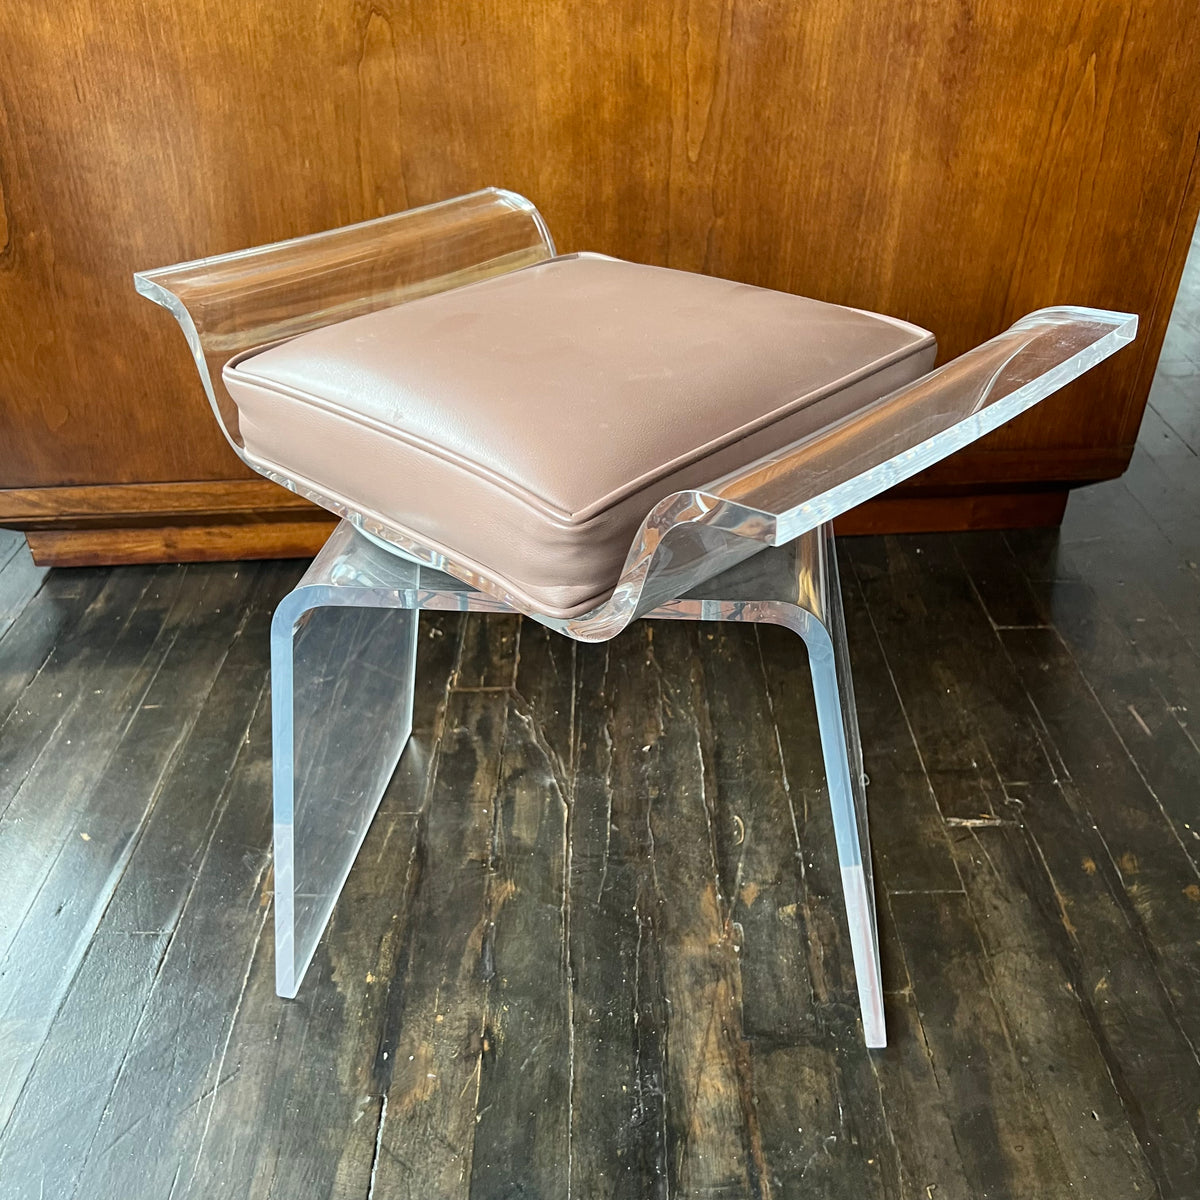 Lucite Vanity stool with Swivel